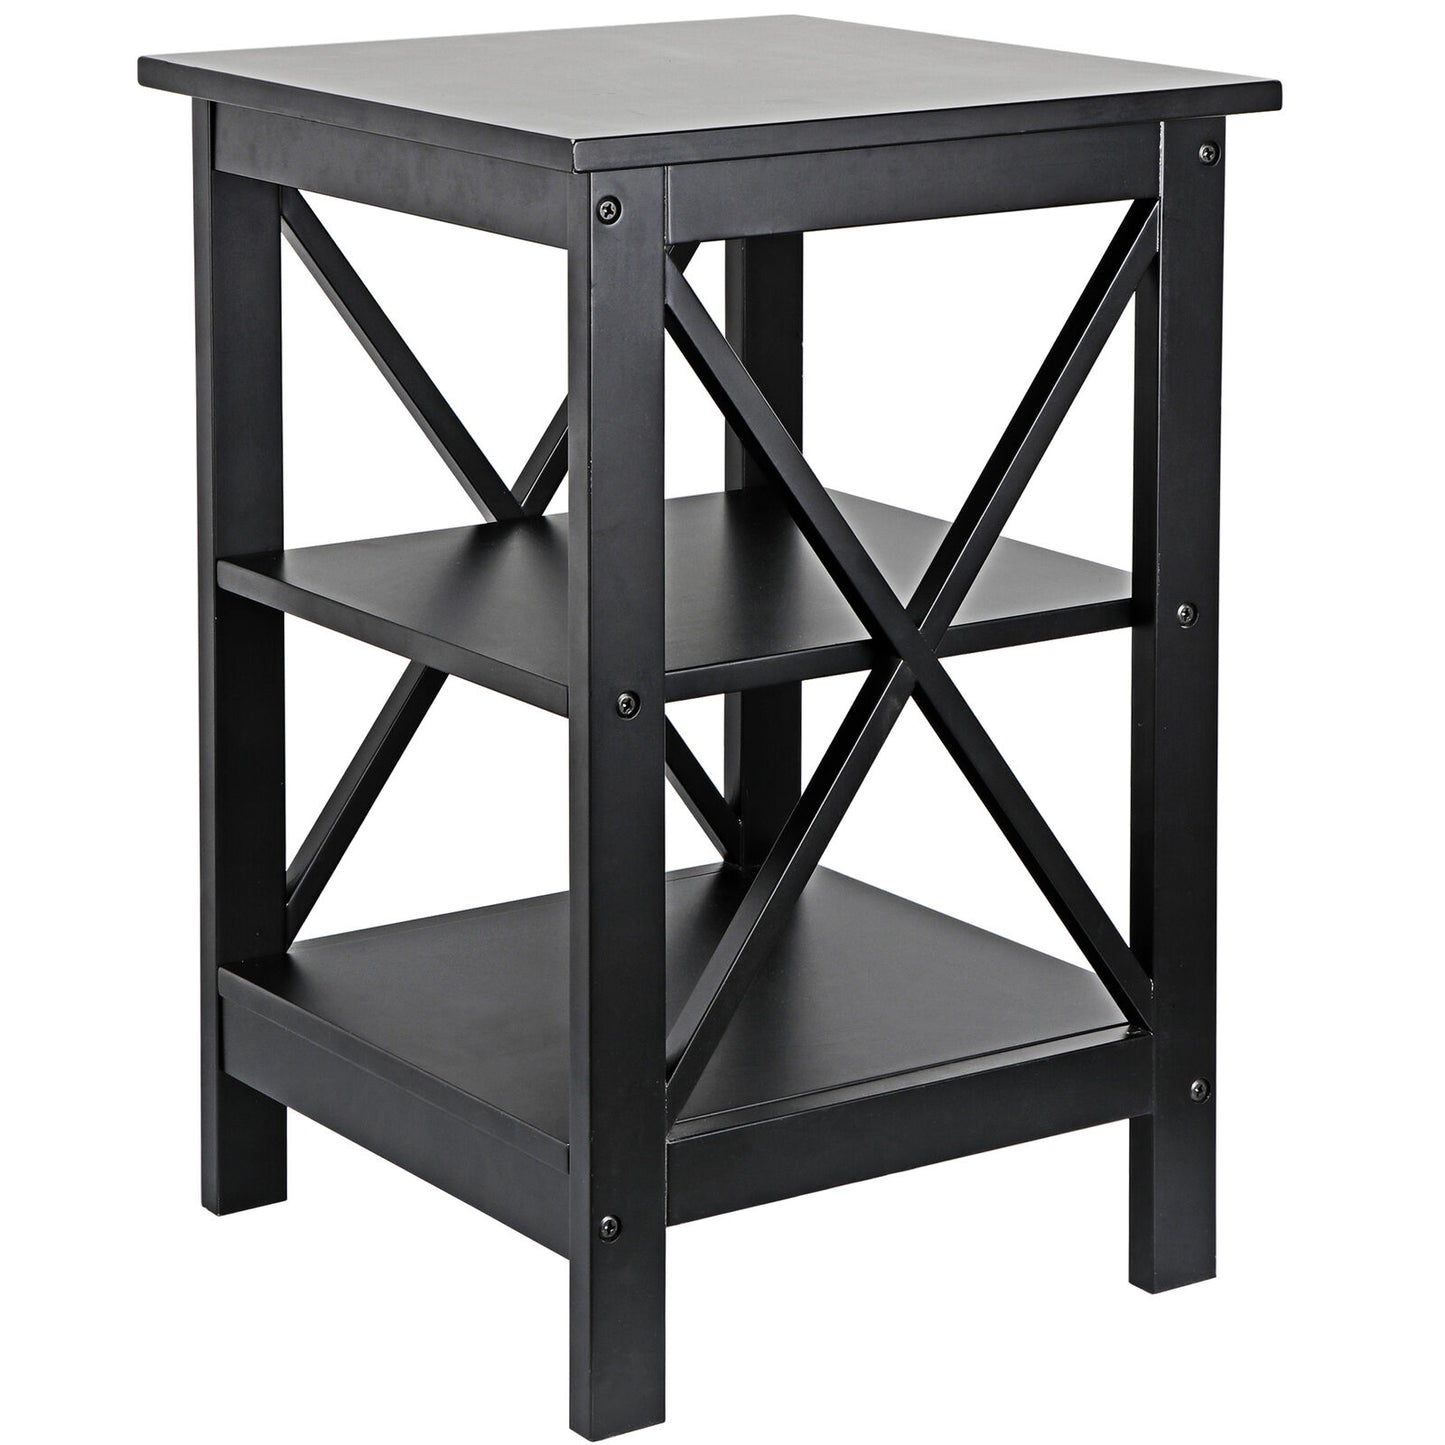 3-Tier End Table w/ Storage Shelves Versatile X-Design Sofa Side Table Furniture